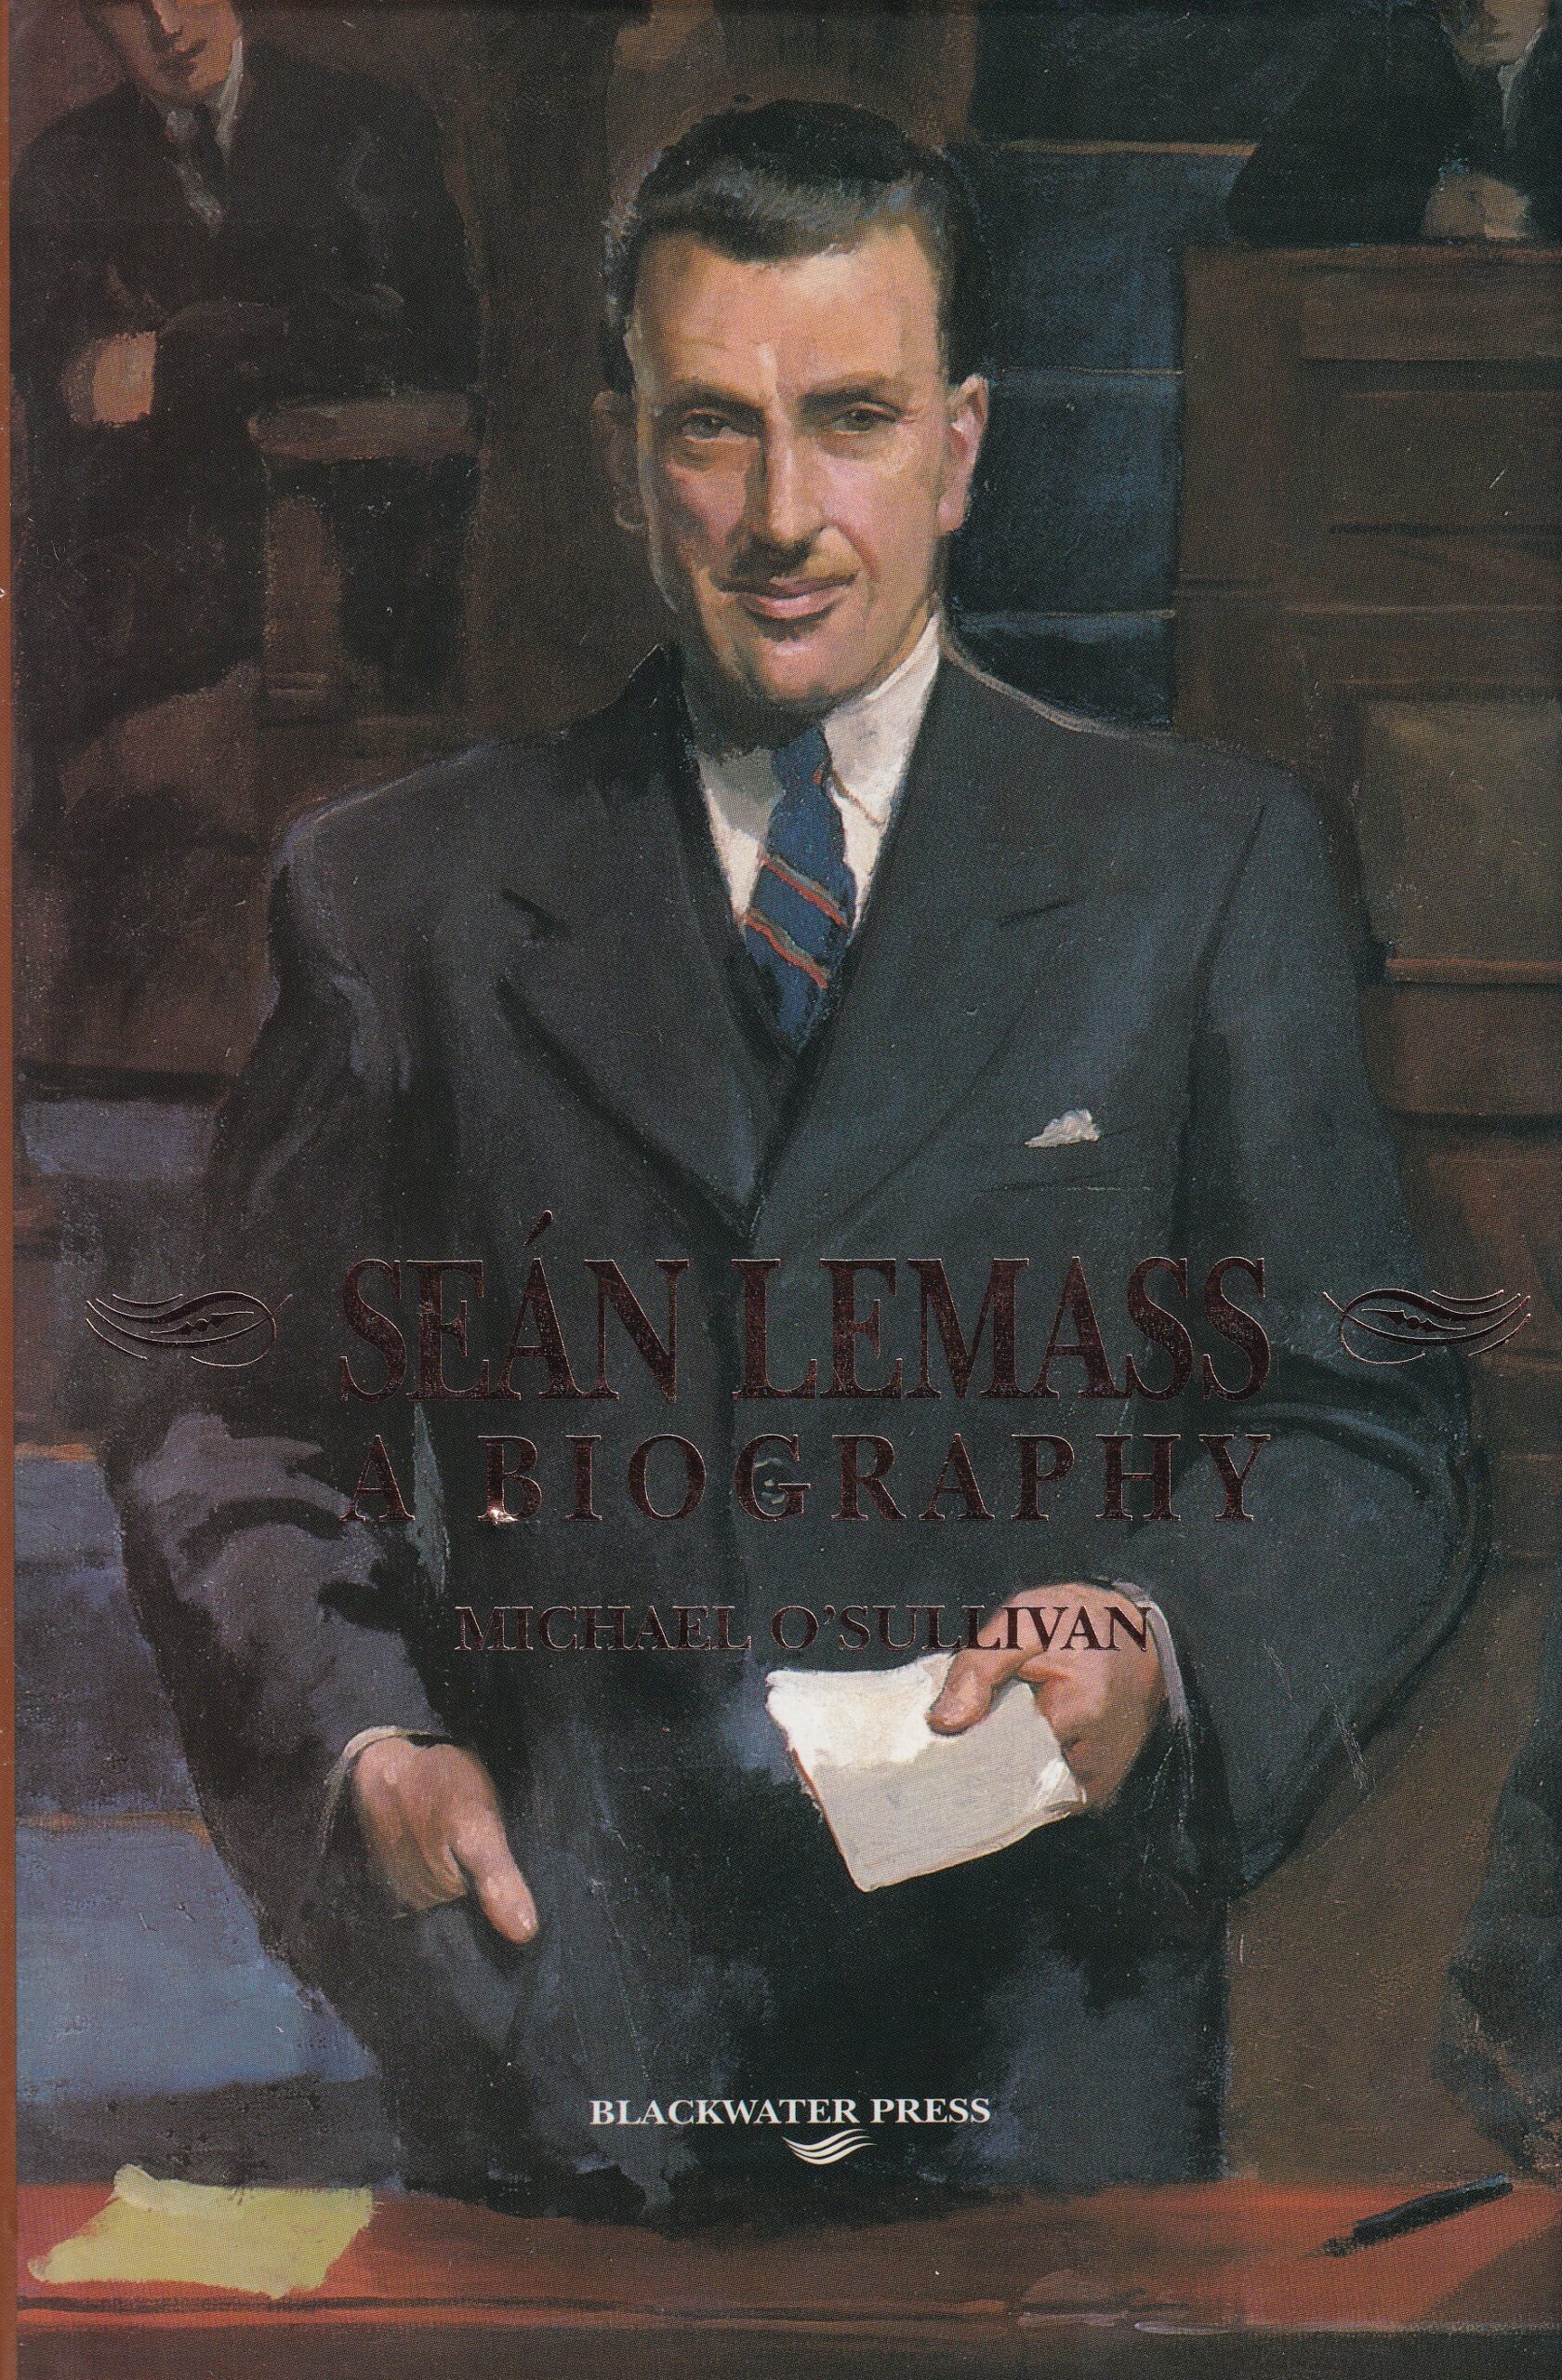 Sean Lemass: A Biography | Michael O'Sullivan | Charlie Byrne's